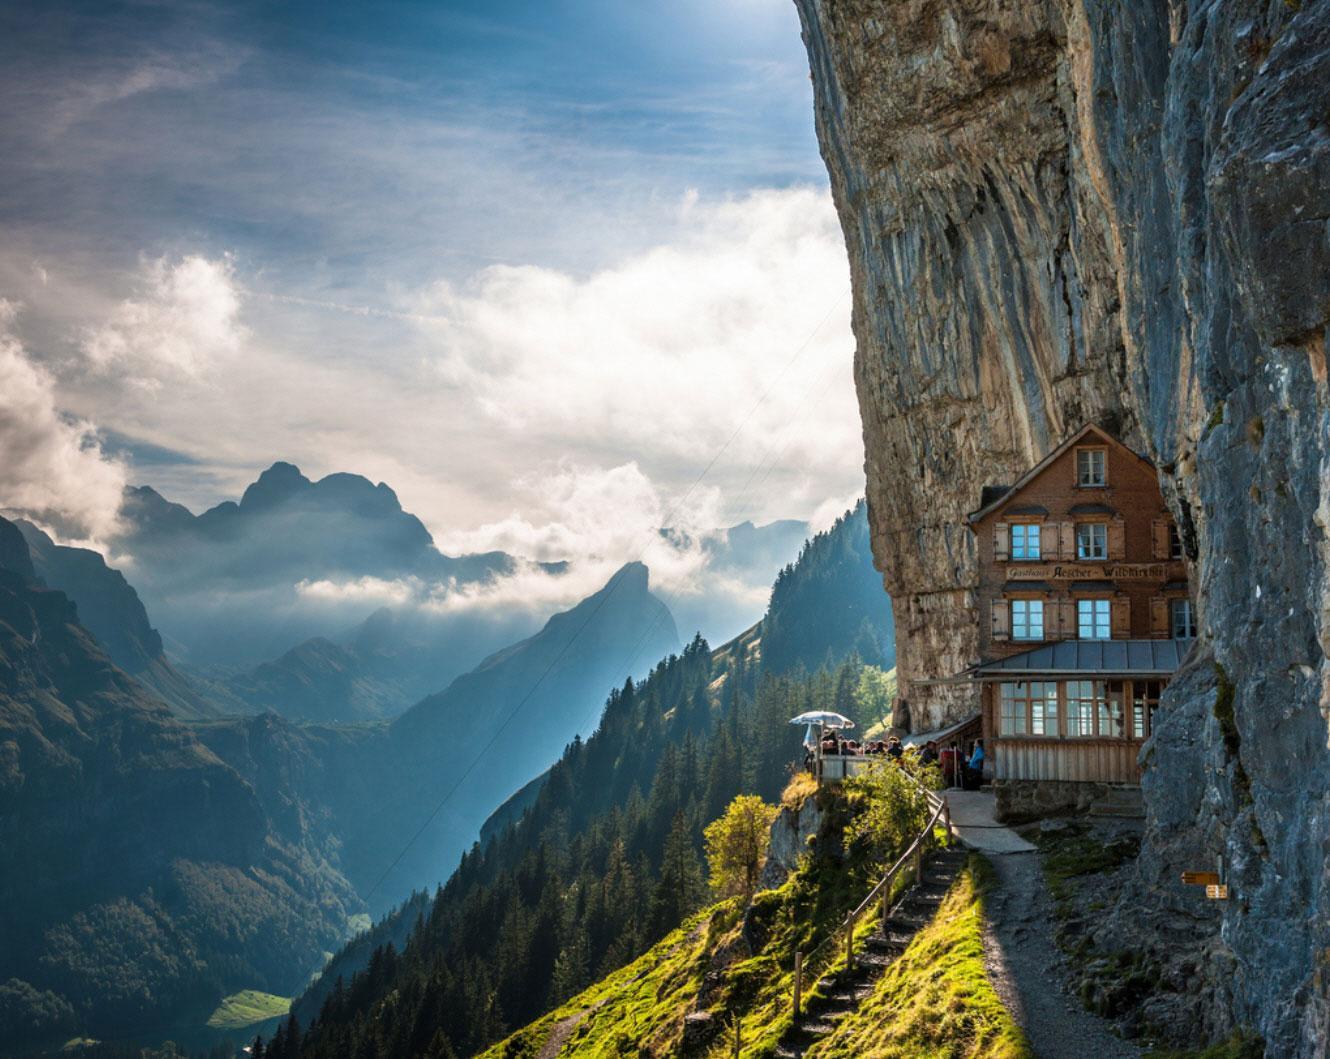 Отель Aescher, Швейцария. Berggasthaus Aescher в швейцарских Альпах. Скала Aescher Швейцария. Форольо Швейцария. Amazing picture